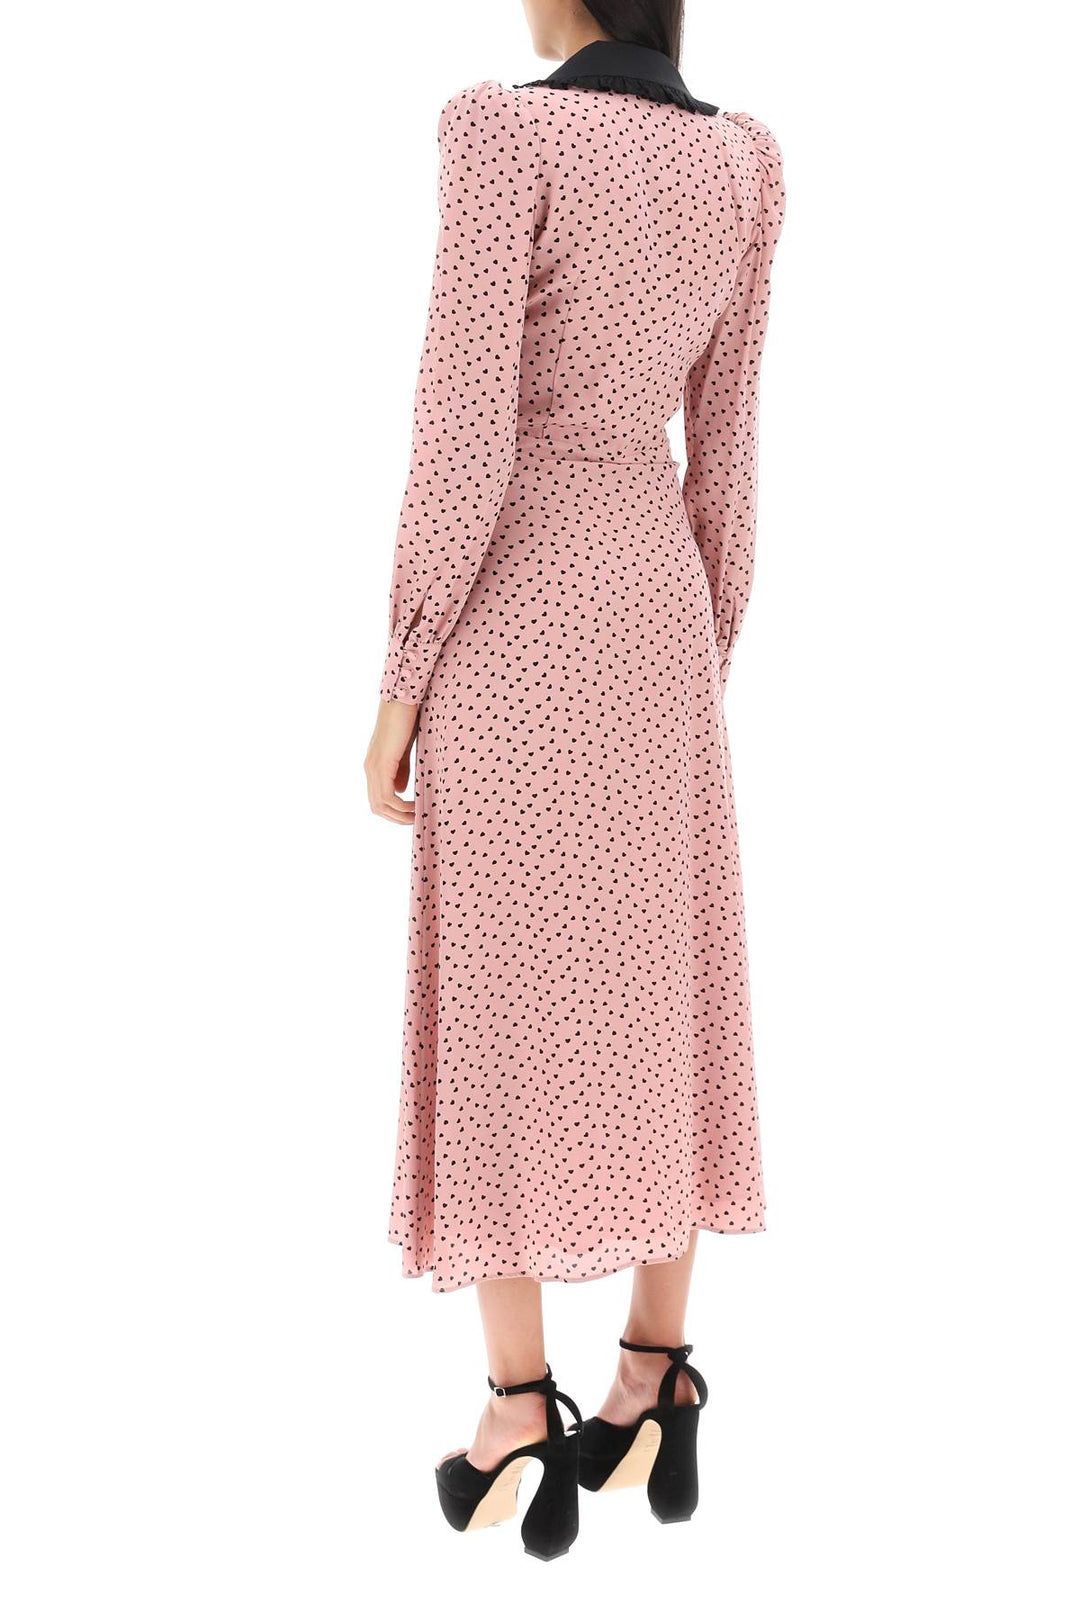 Alessandra Rich Midi Dress With Contrasting Collar   Rosa